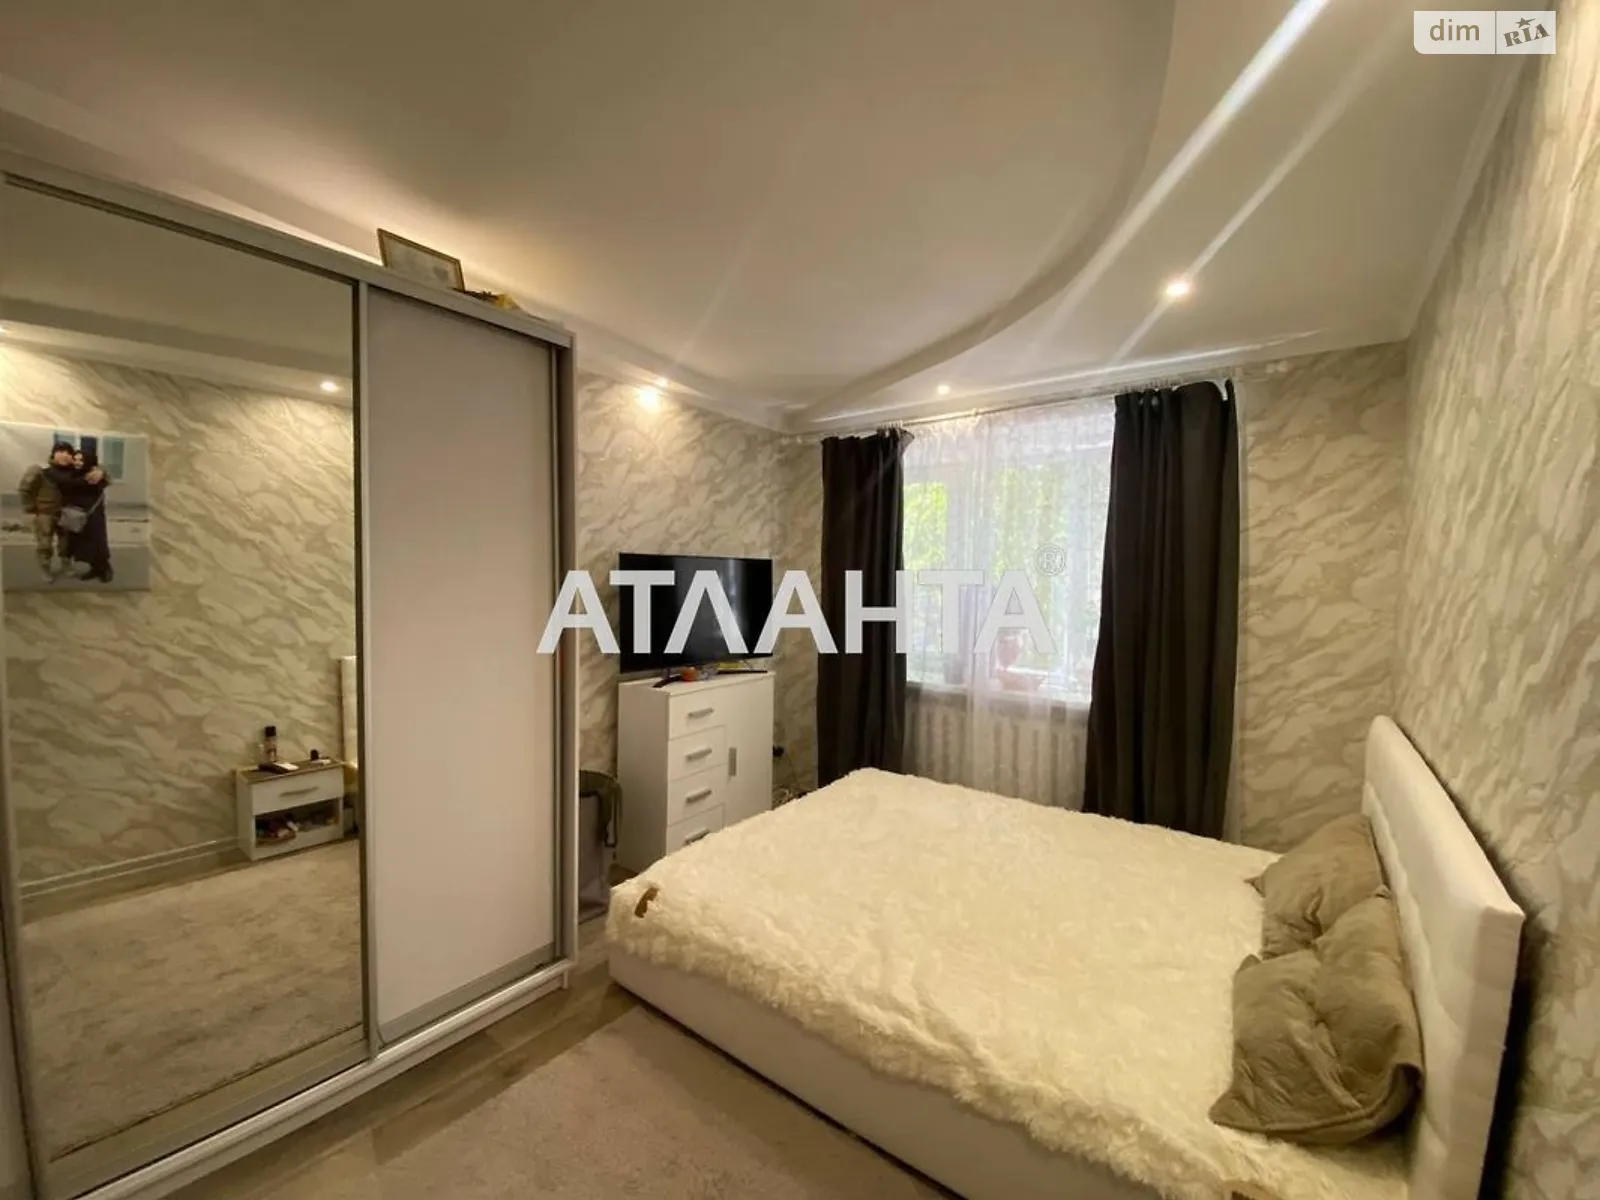 Продается комната 17 кв. м в Одессе, цена: 12500 $ - фото 1